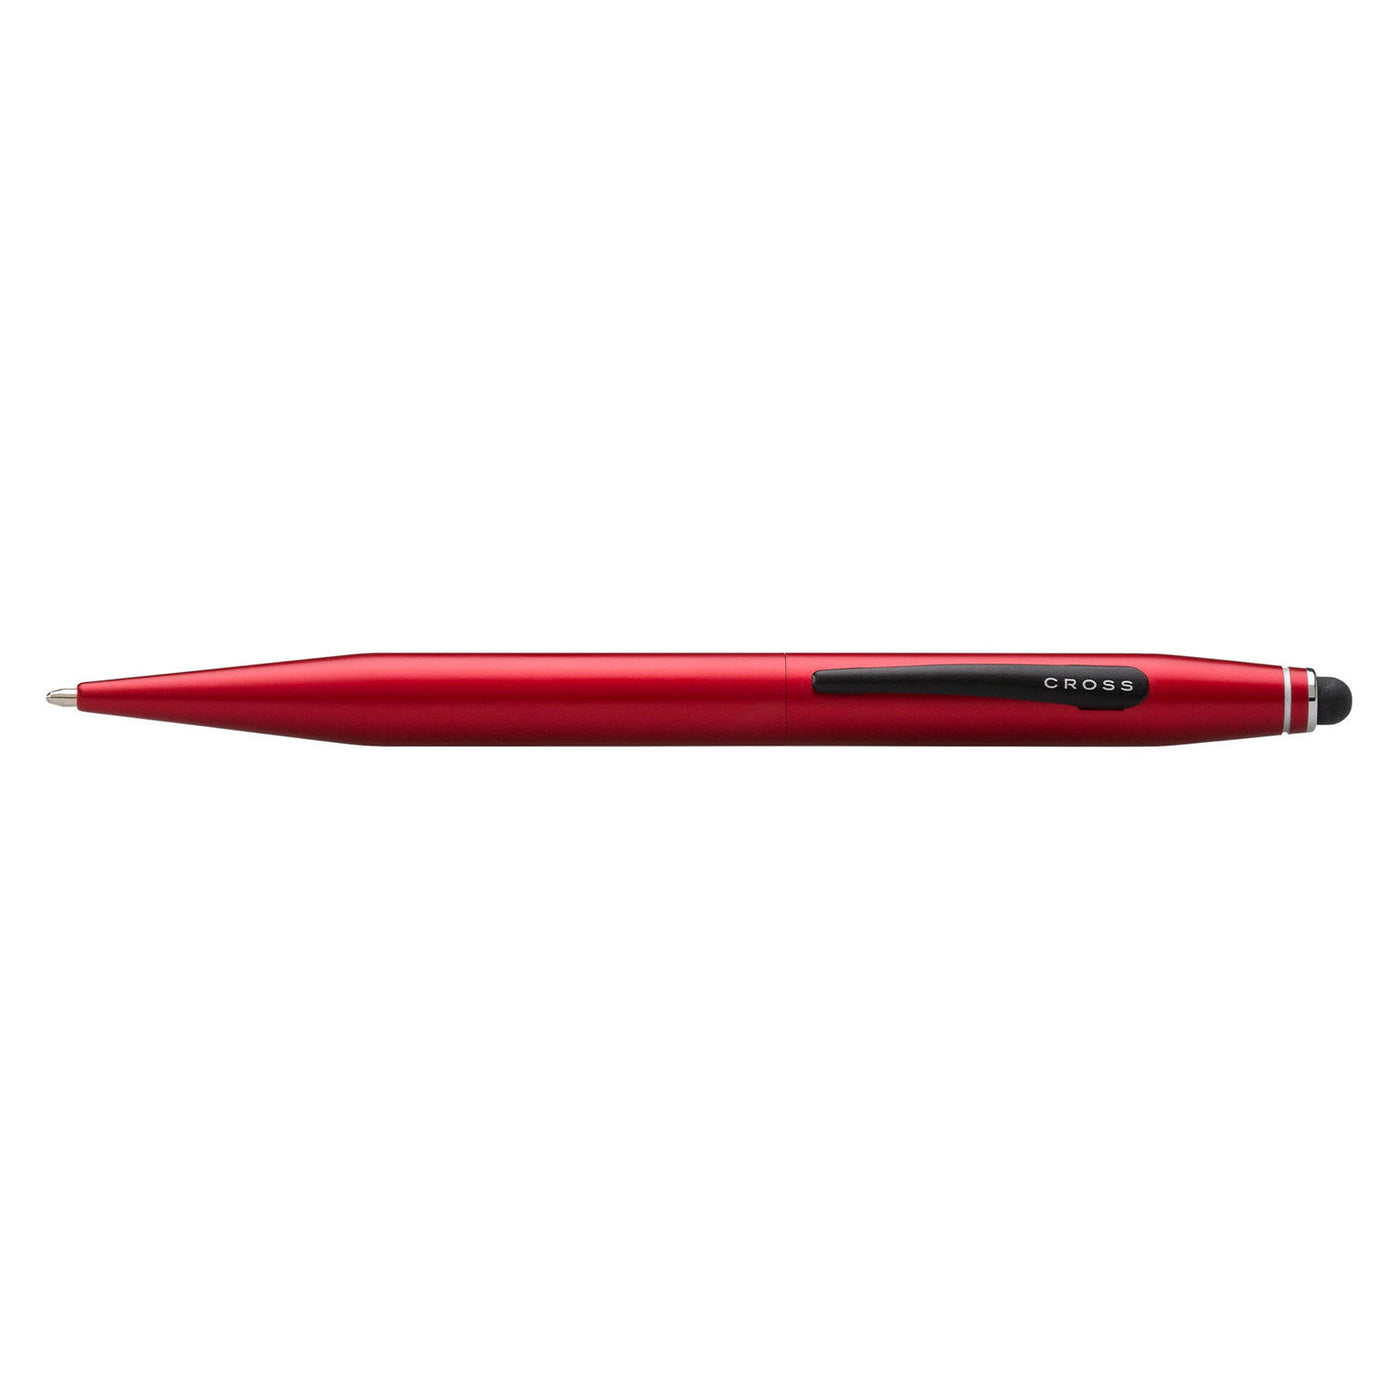 Cross Tech2 Multifunction Ball Pen with Stylus - Metallic Red 3